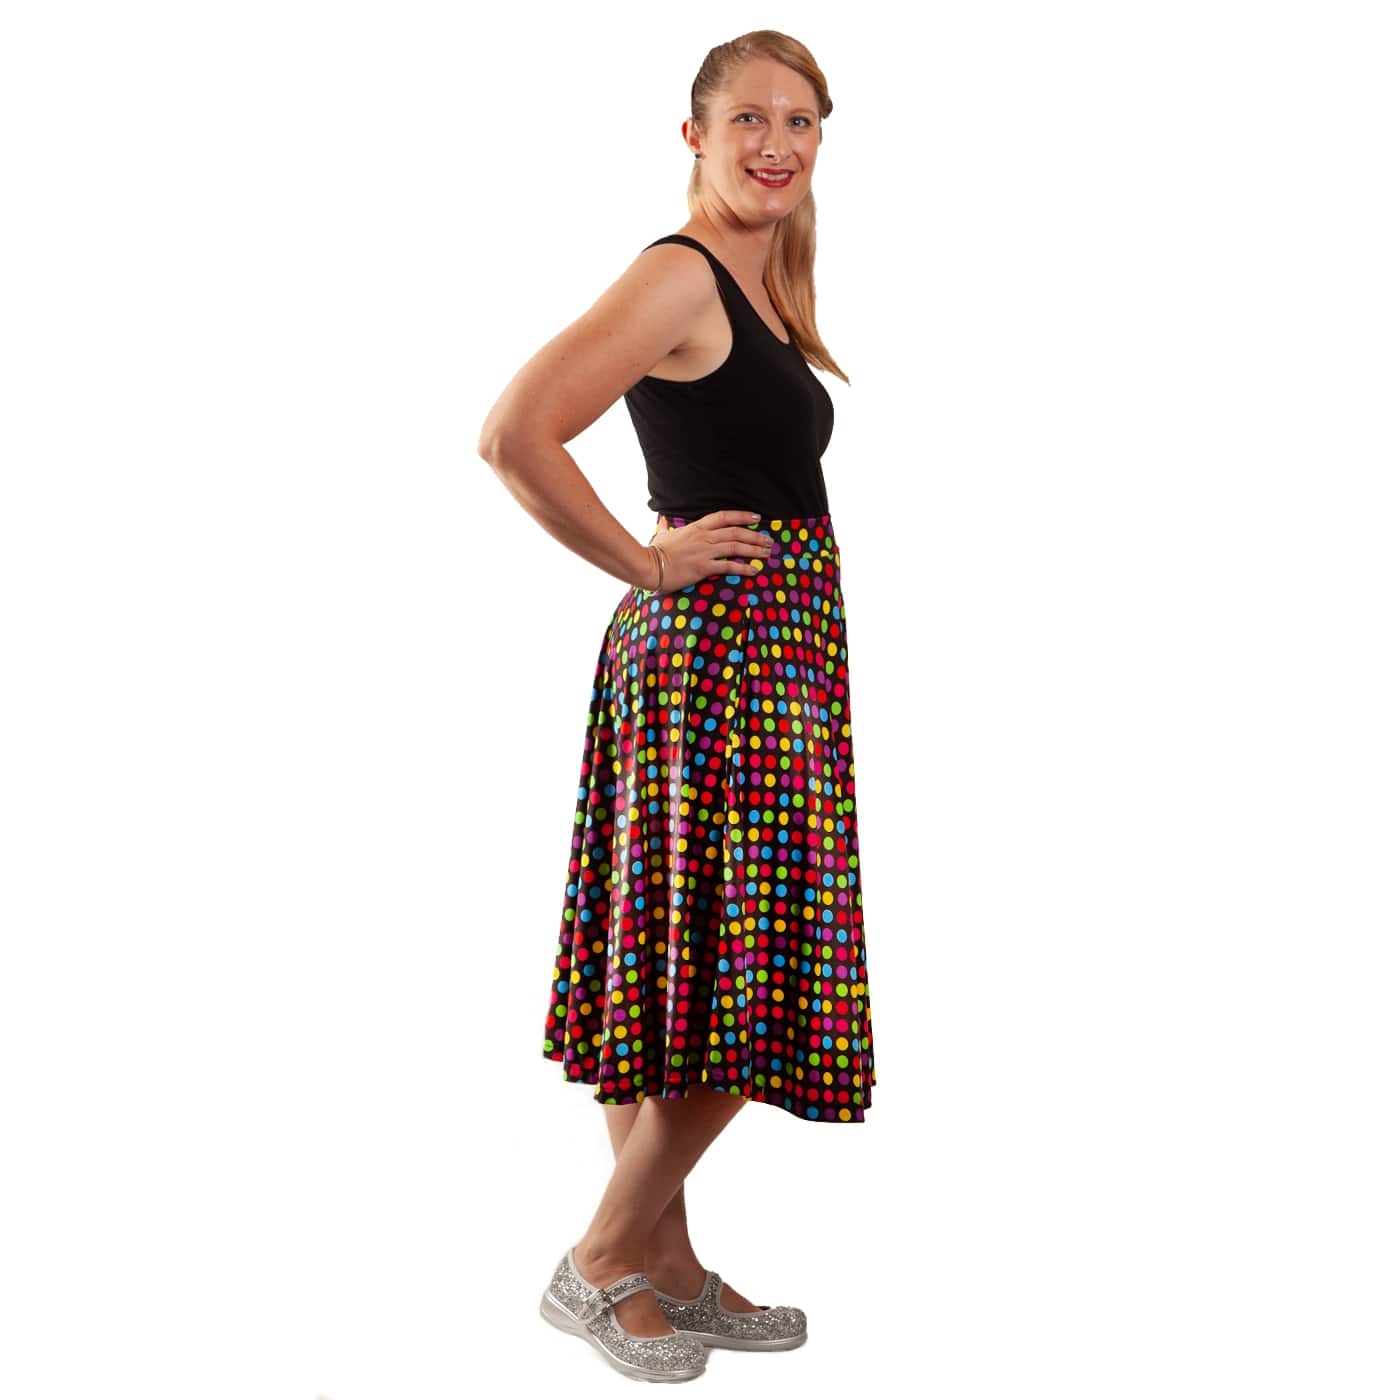 Confetti Swishy Skirt by RainbowsAndFairies.com.au (Rainbow Spots - Polka Dots - Colourful - Circle Skirt With Pockets - Mod Retro) - SKU: CL_SWISH_CONFT_ORG - Pic-06